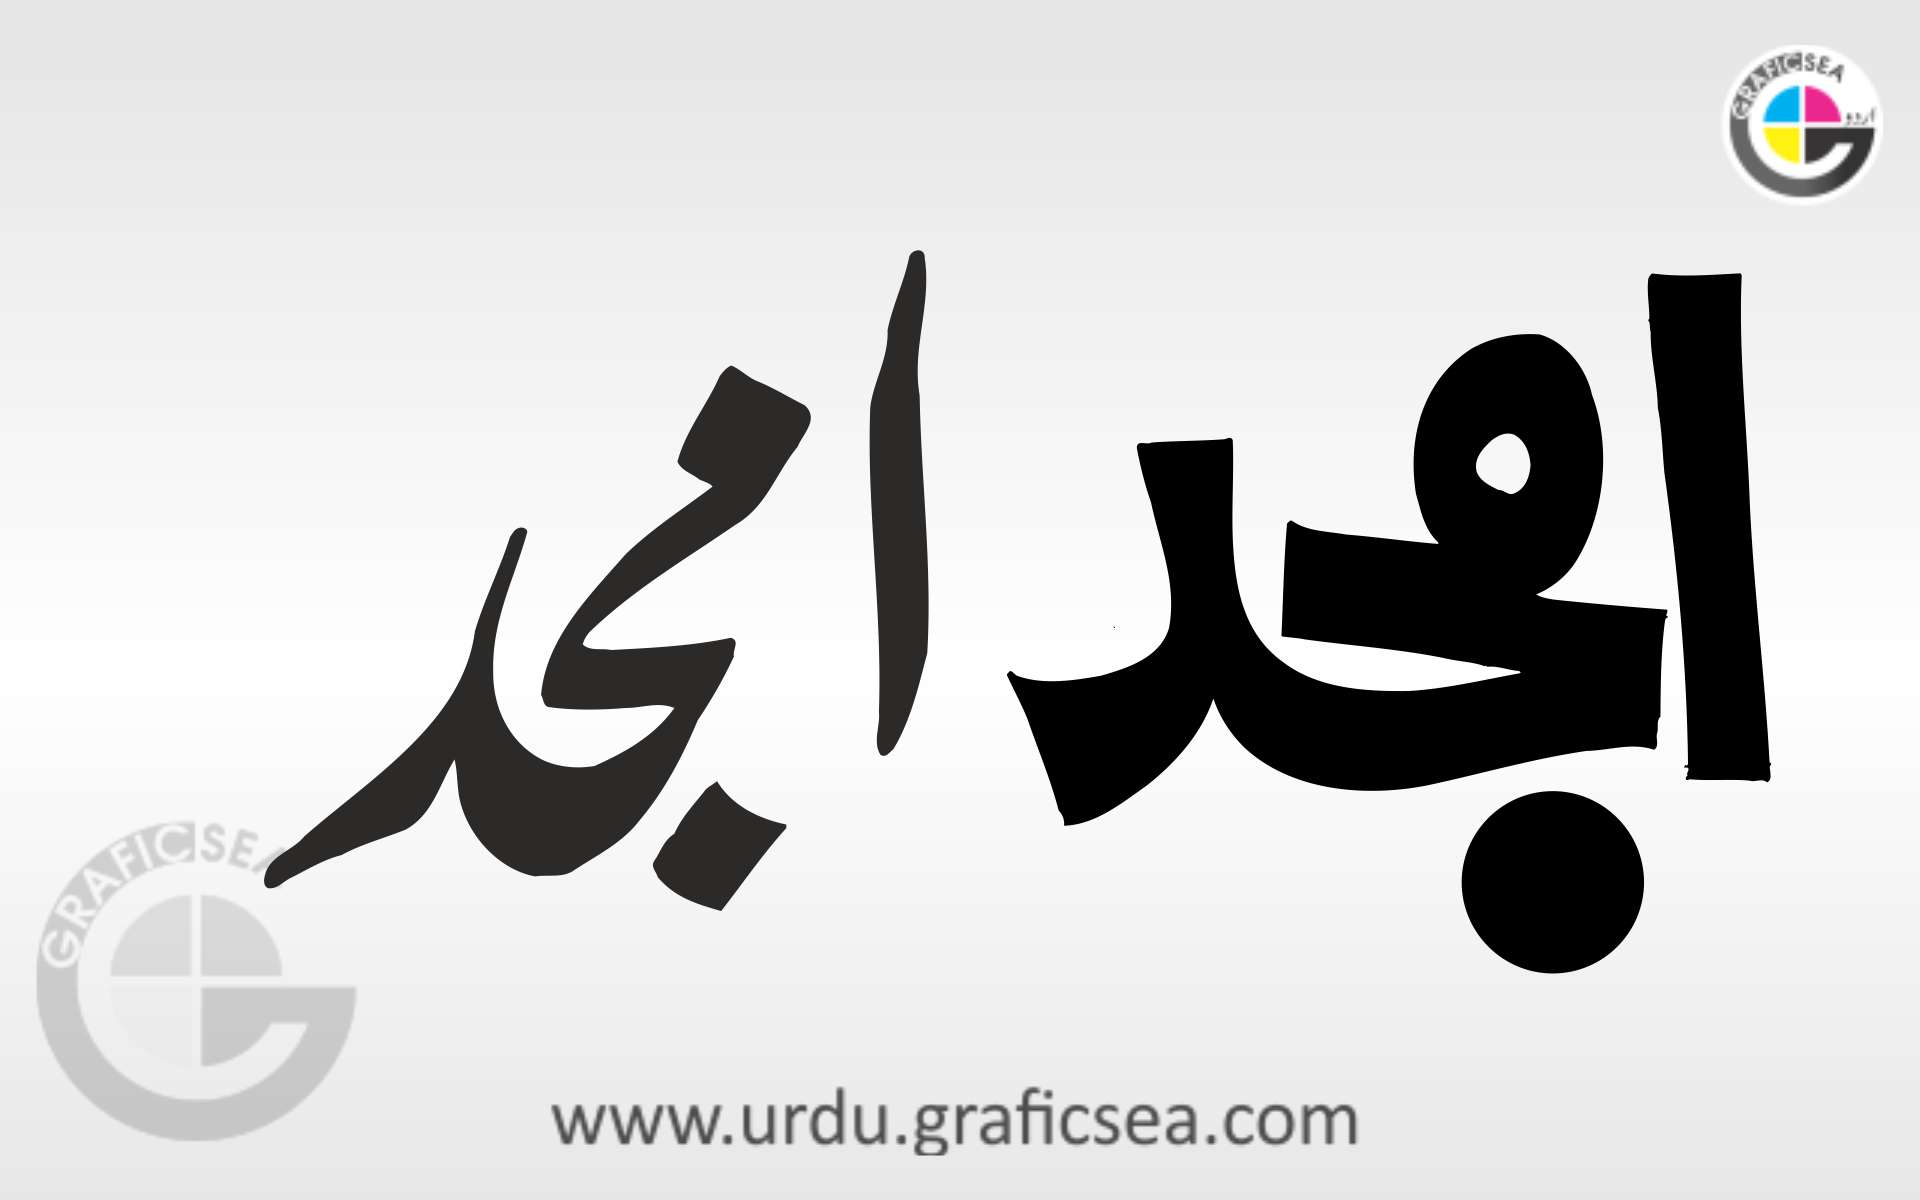 Urdu Name Amjad in 2 Style Calligraphy free